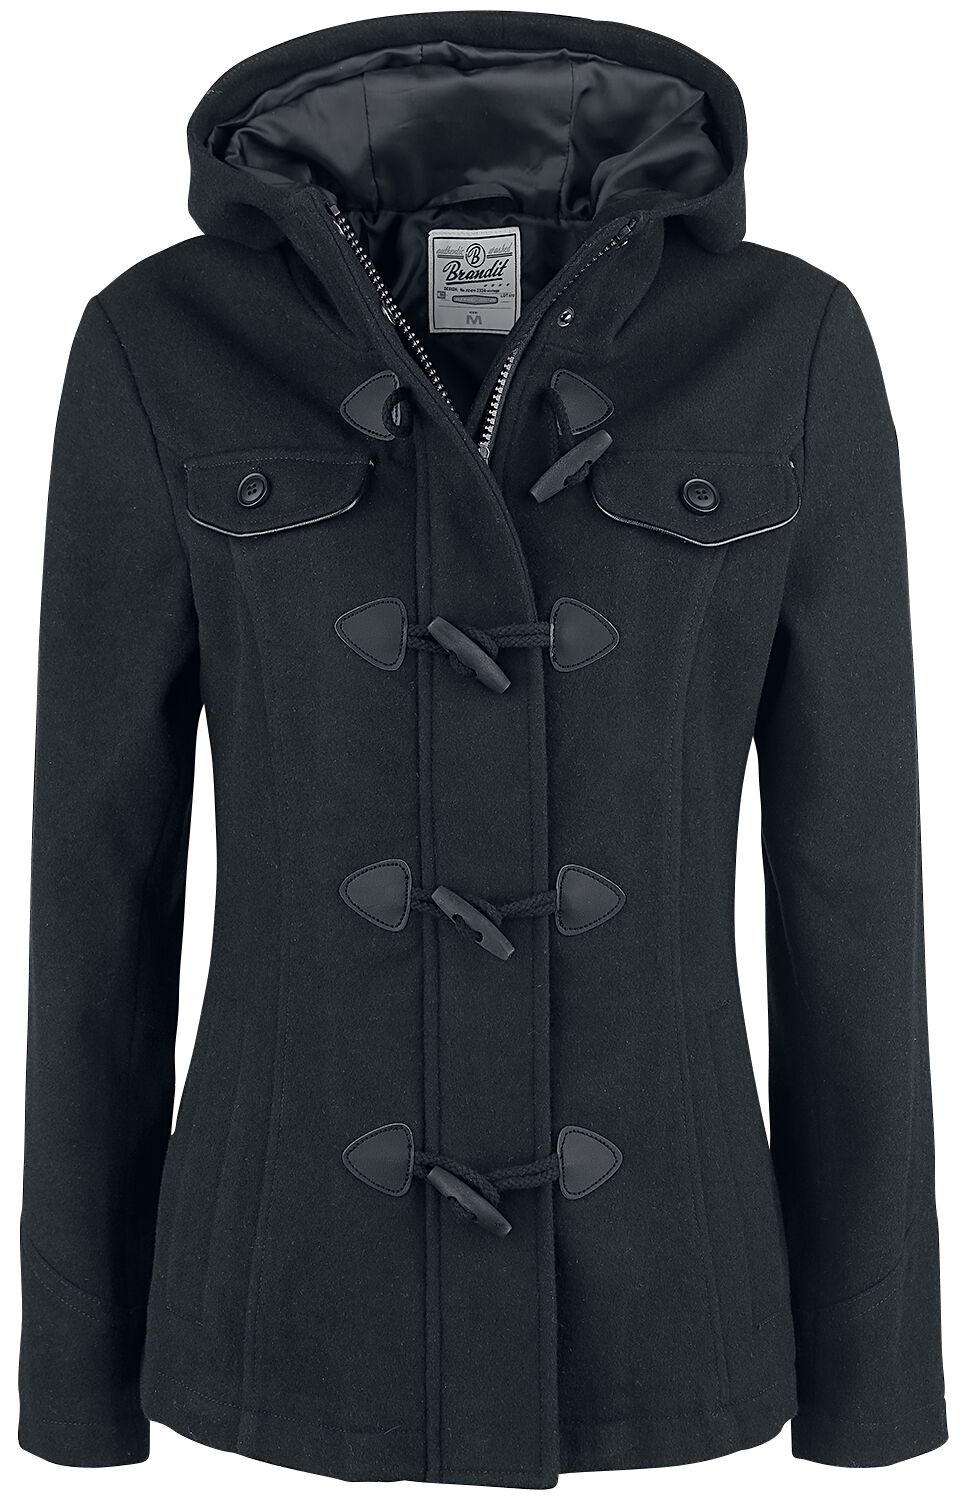 manteau femme style duffle coat